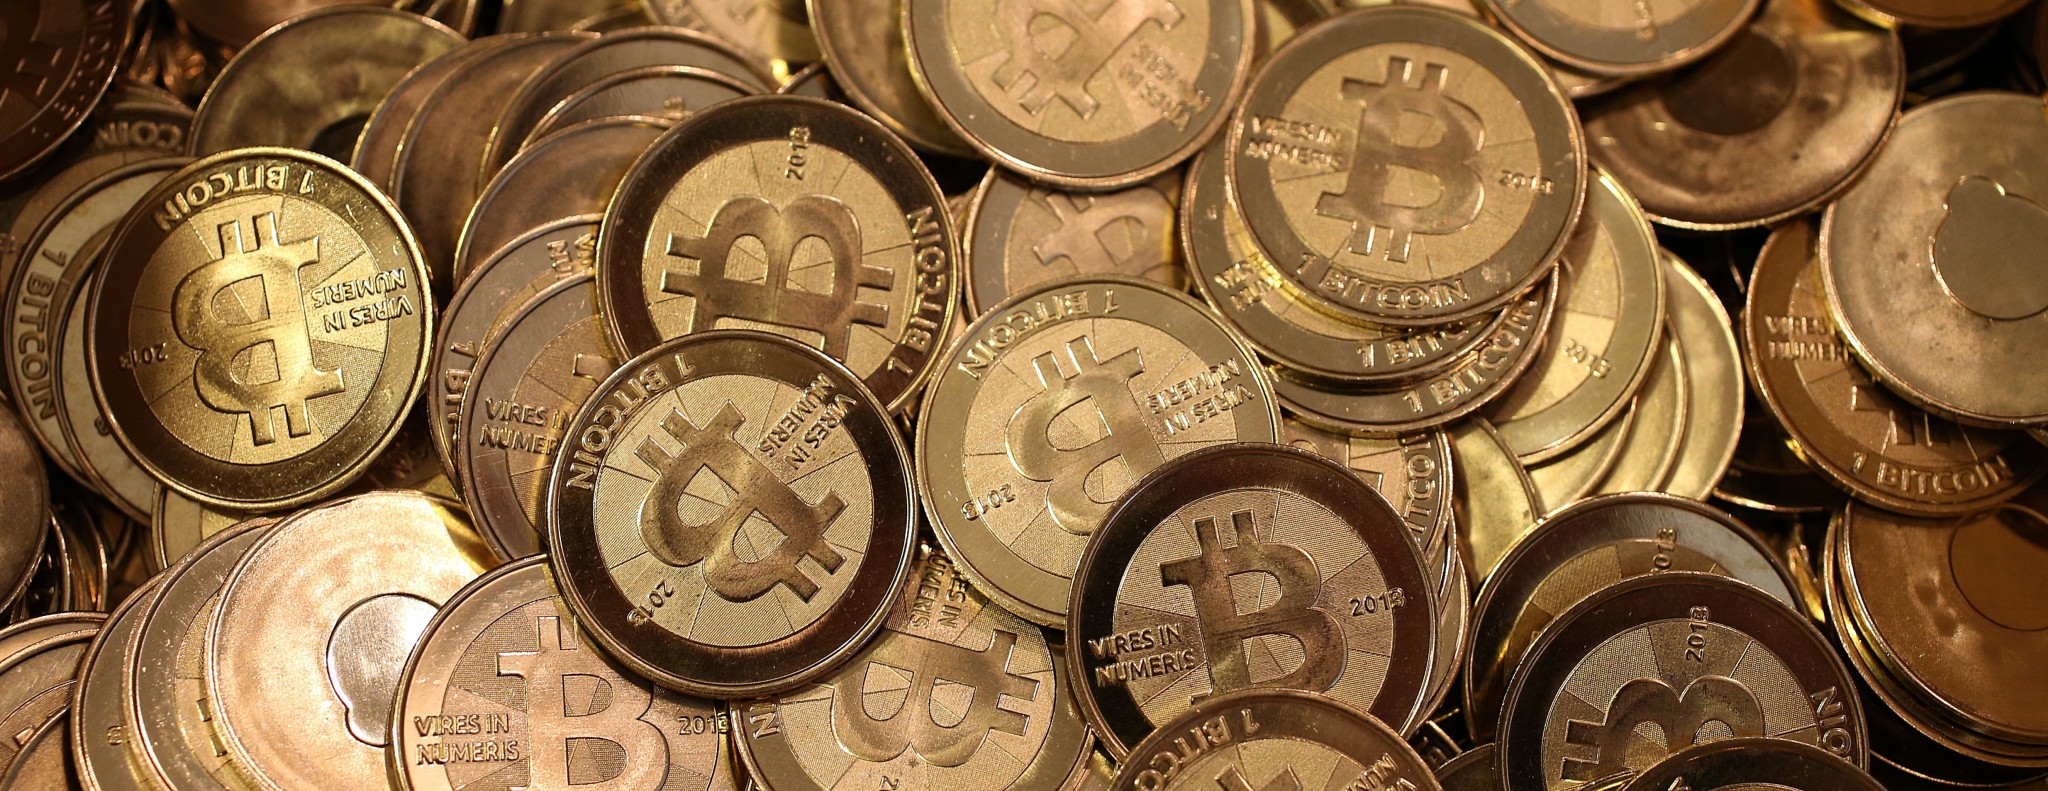 Le Bitcoin, une monnaie libertarienne